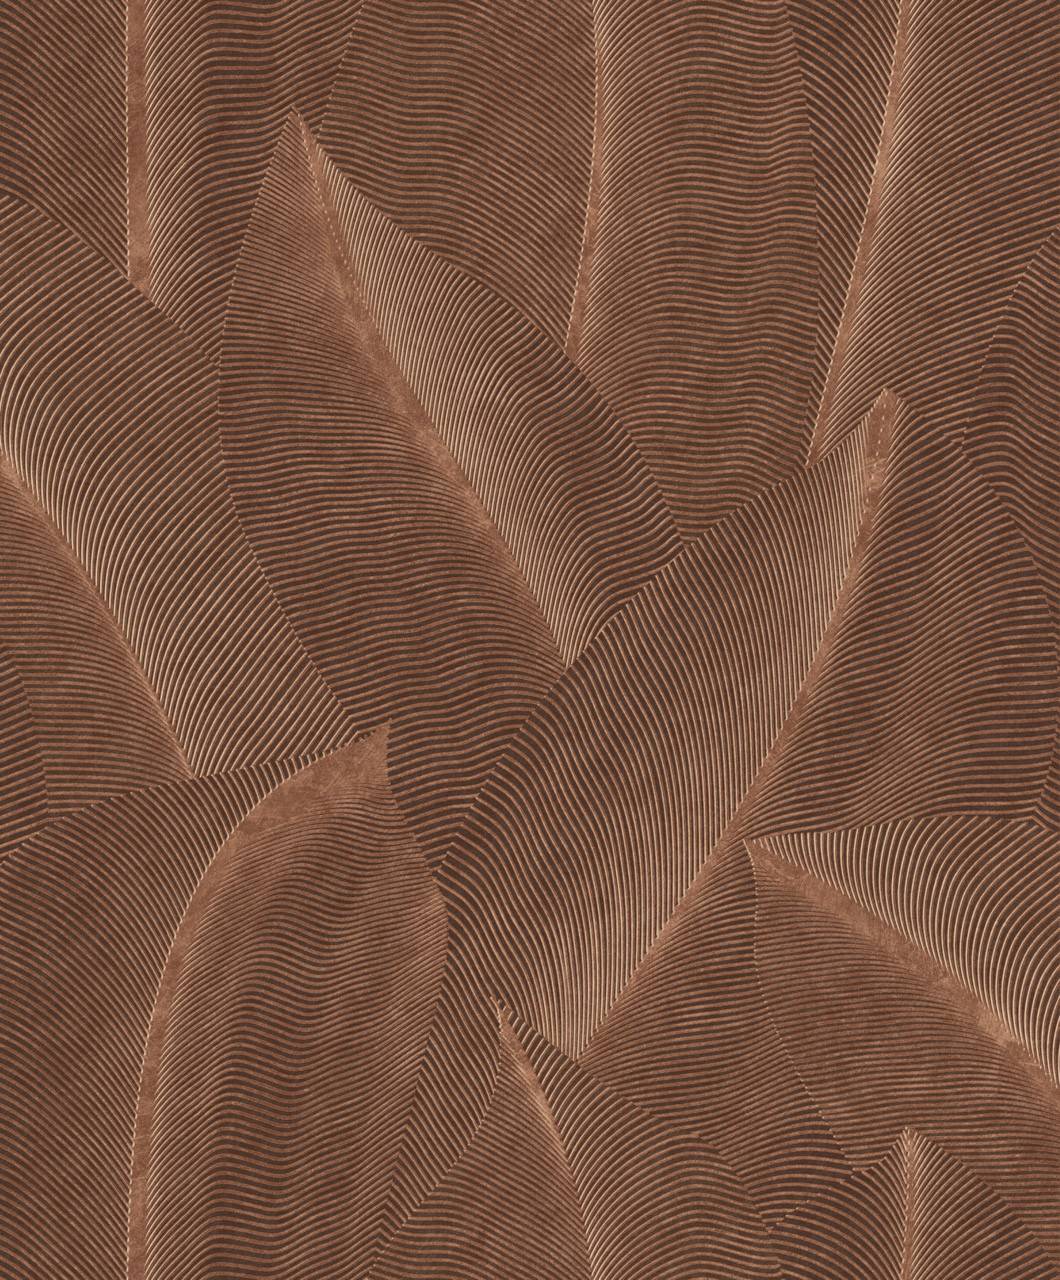 Thomas fleece wallpaper attraction brown leaves